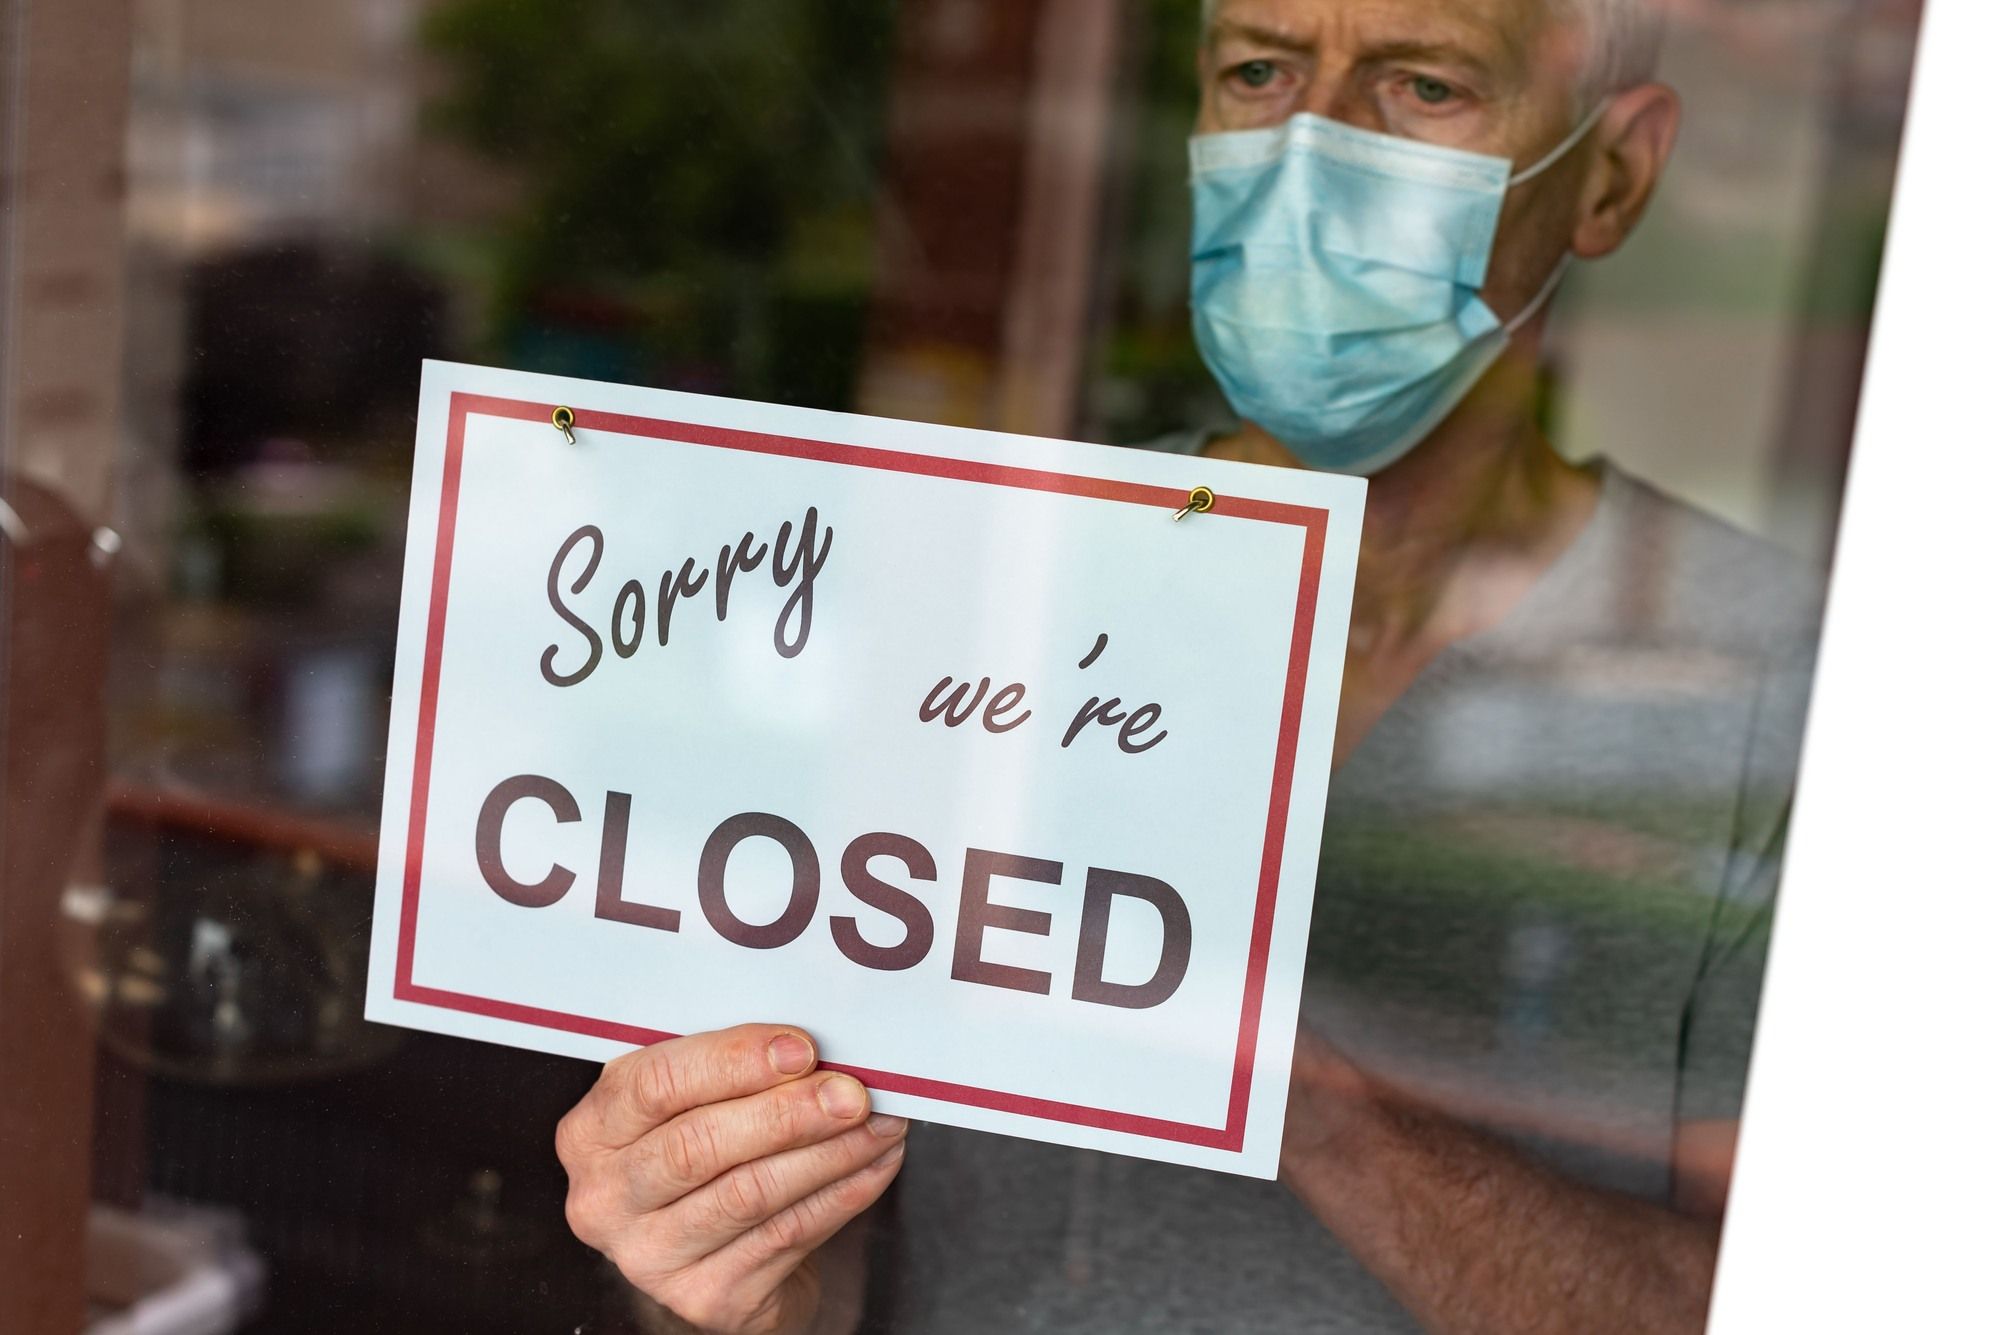 Closed sign regarding the restaurant business interruption class action lawsuit